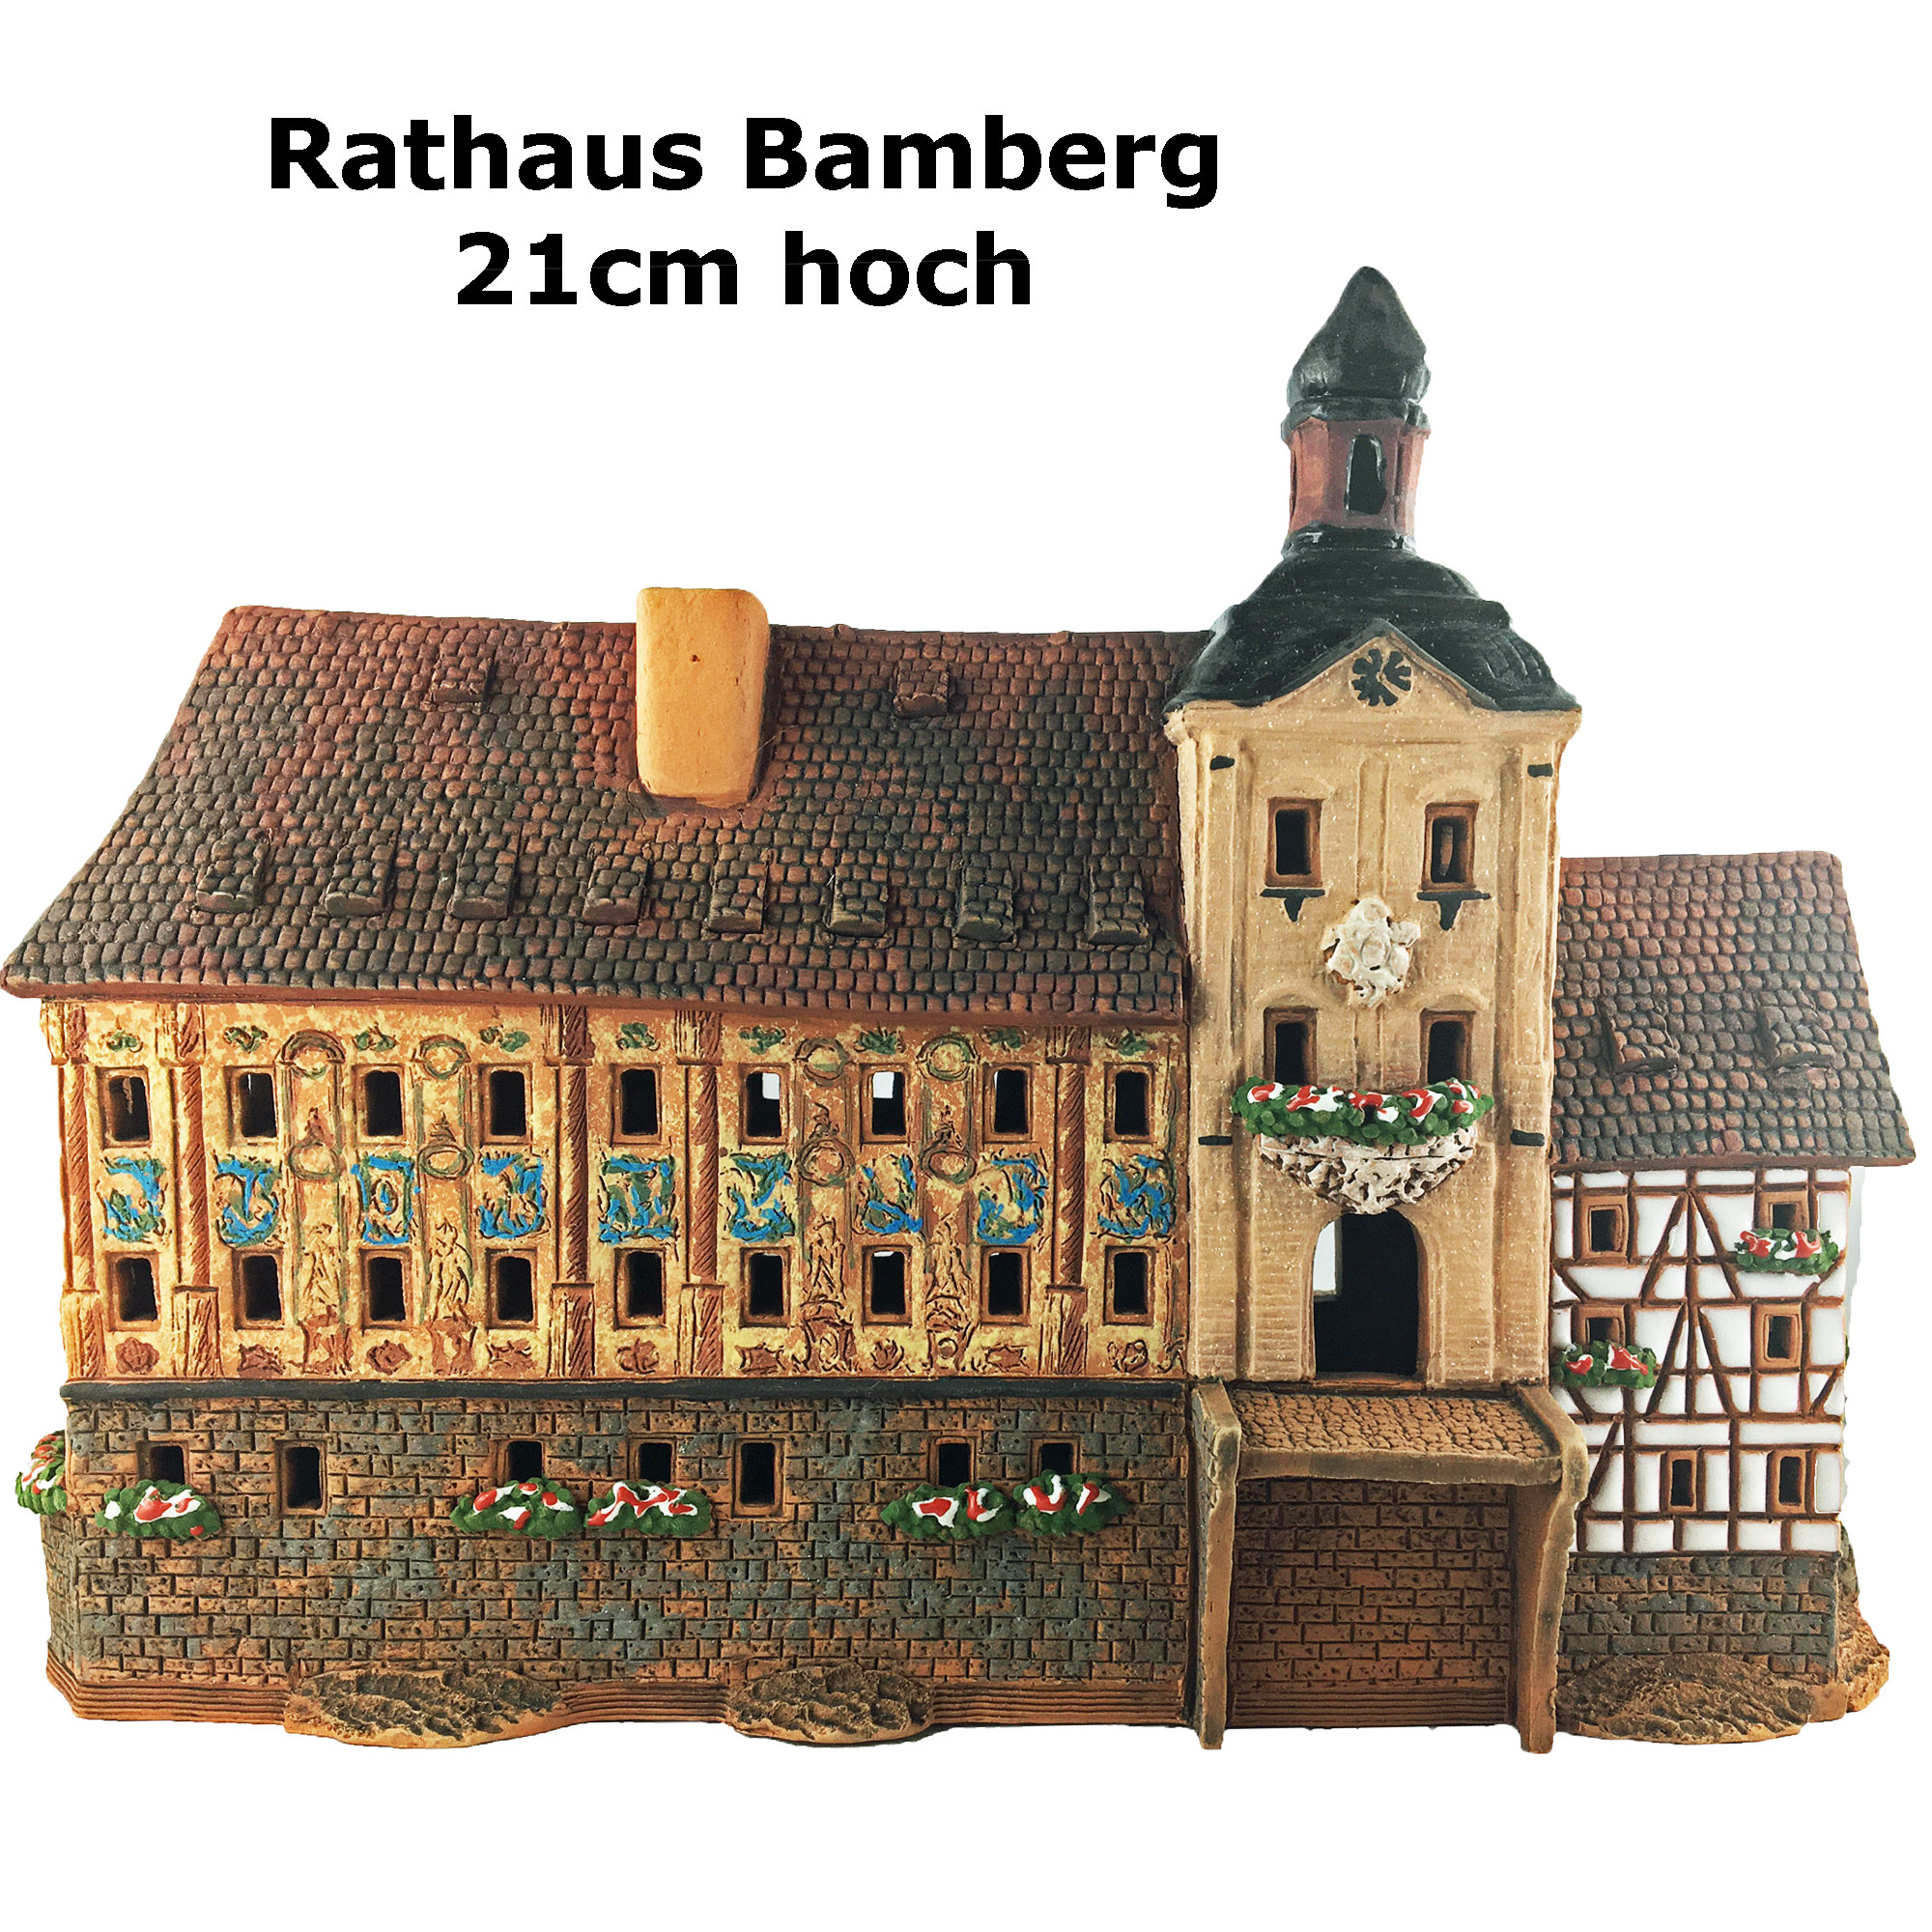 Rathaus Bamberg ceramic miniature 21cm hoch